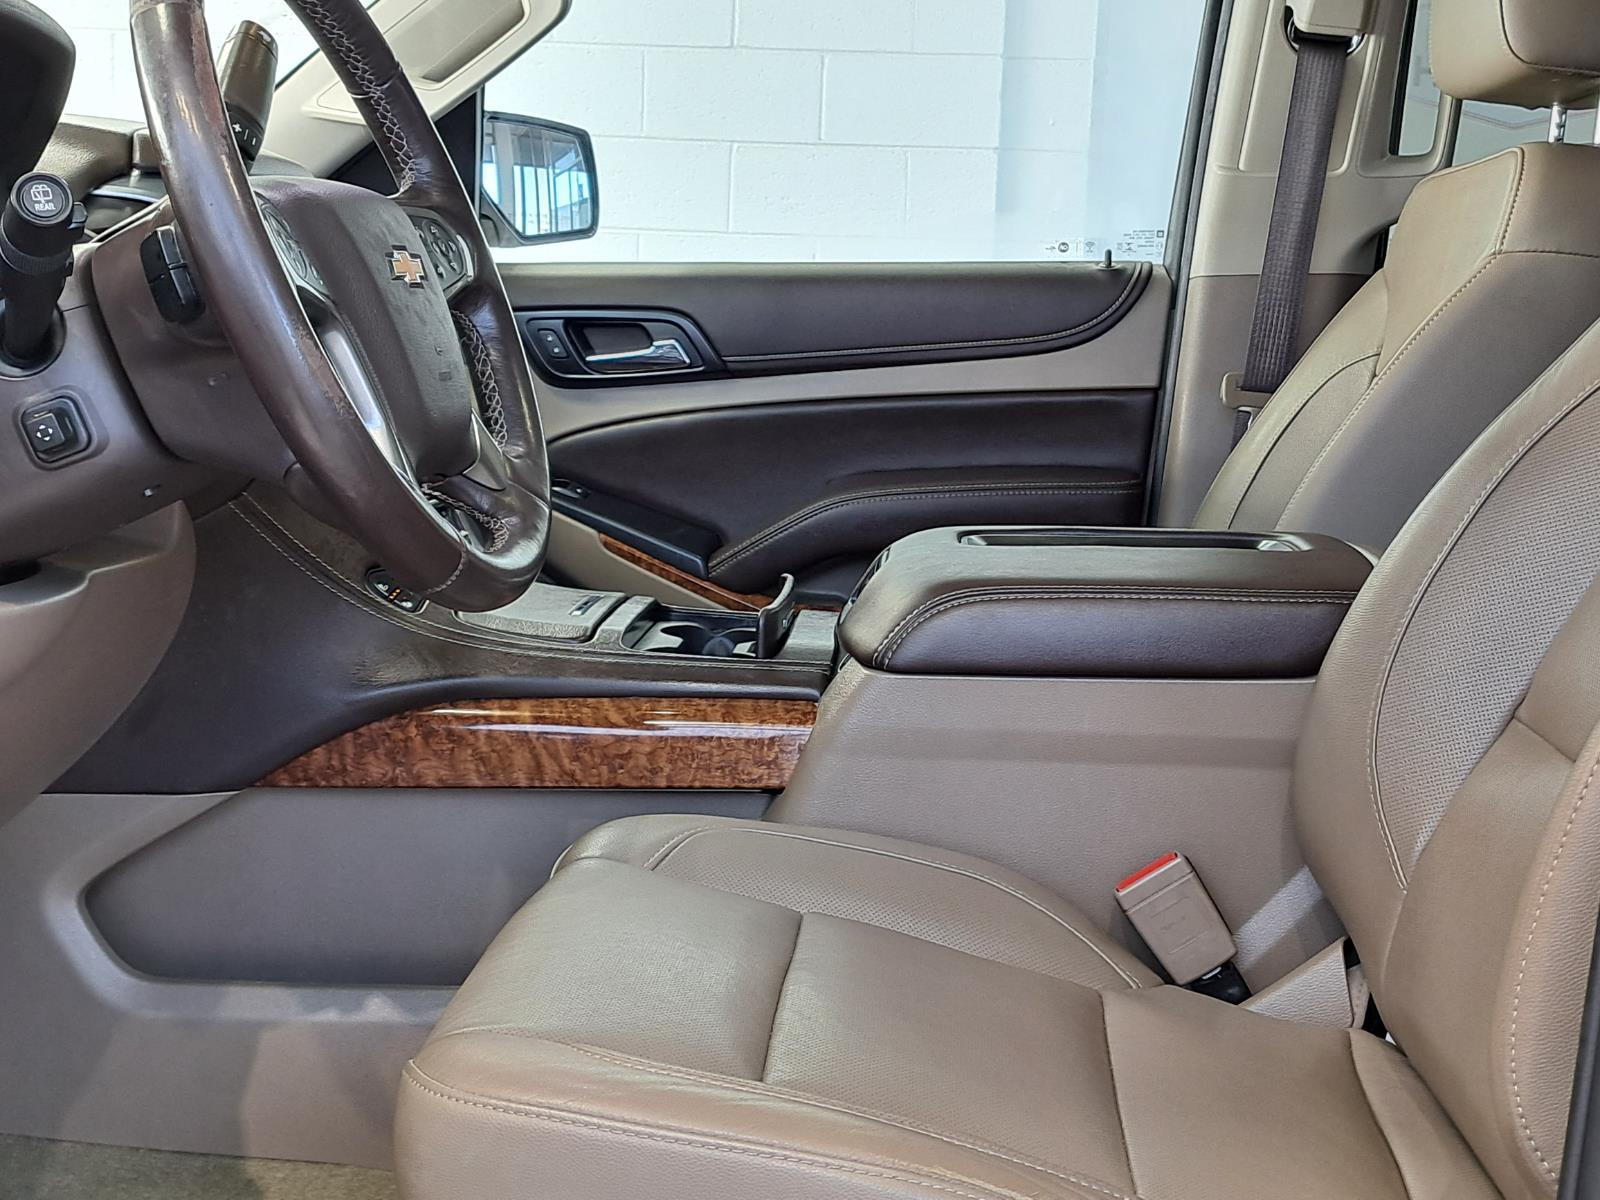 2019 Chevrolet Suburban Premier SUV Four Wheel Drive thumbnail 64